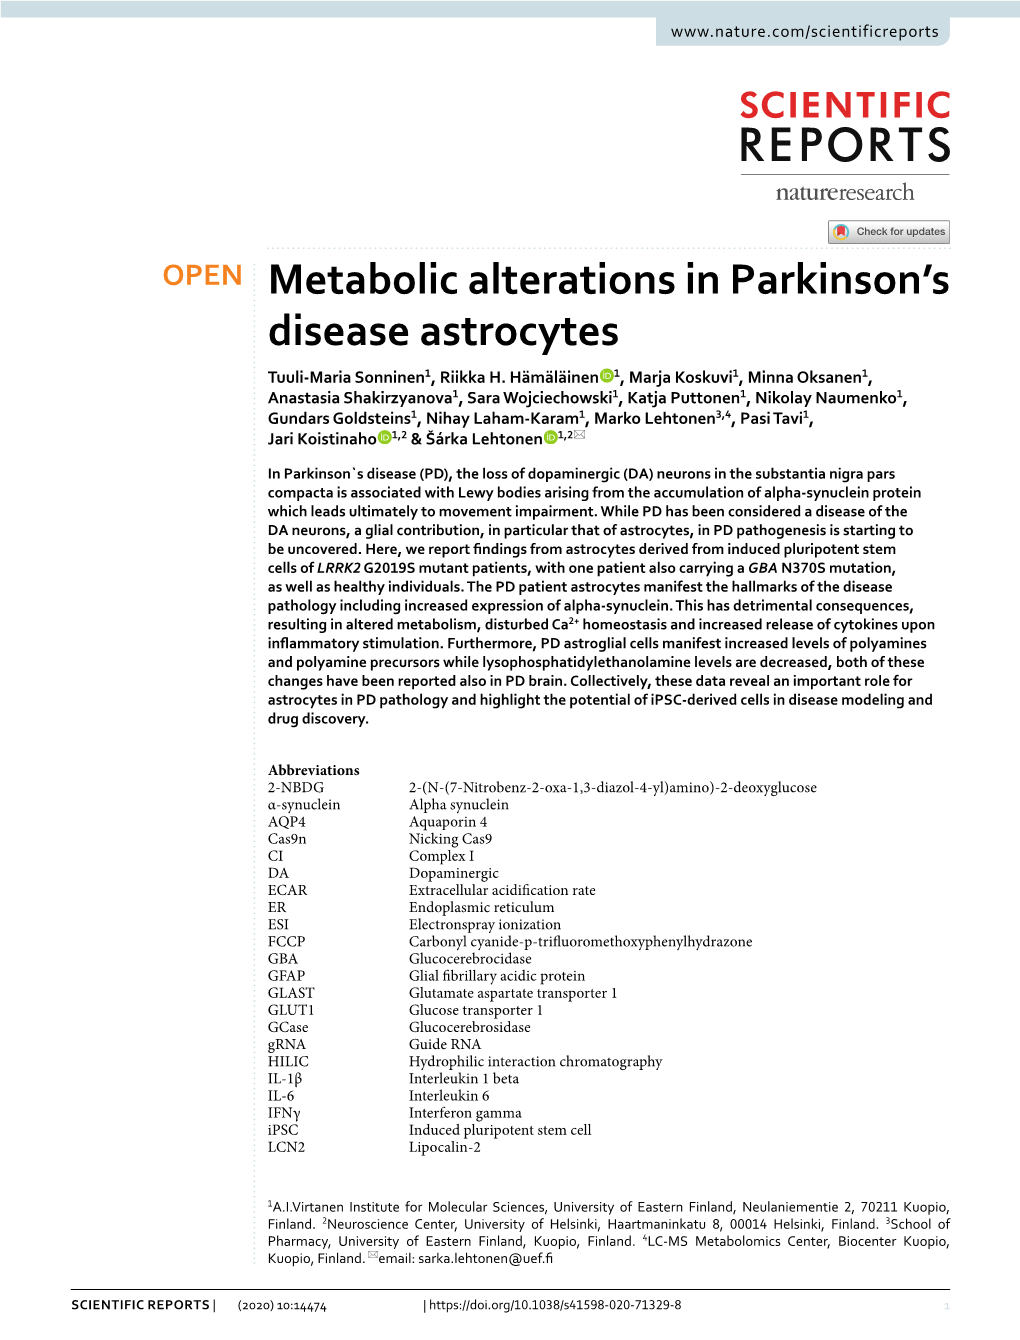 Metabolic Alterations in Parkinson's Disease Astrocytes